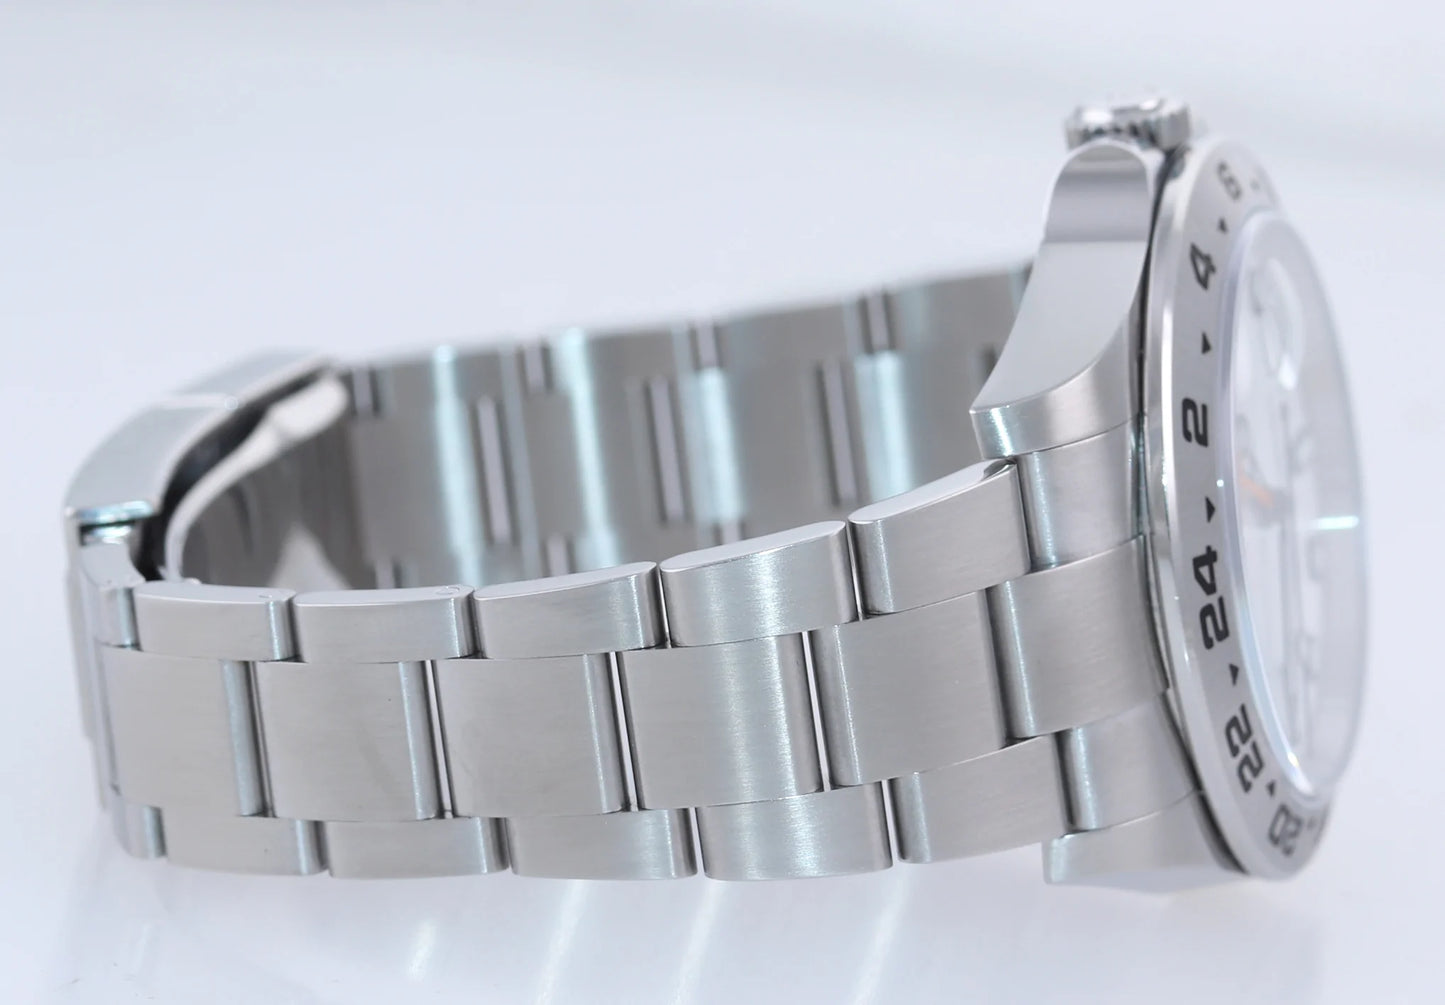 MINT 2020 Rolex Explorer II 42mm 216570 Polar White Dial Steel Watch Box